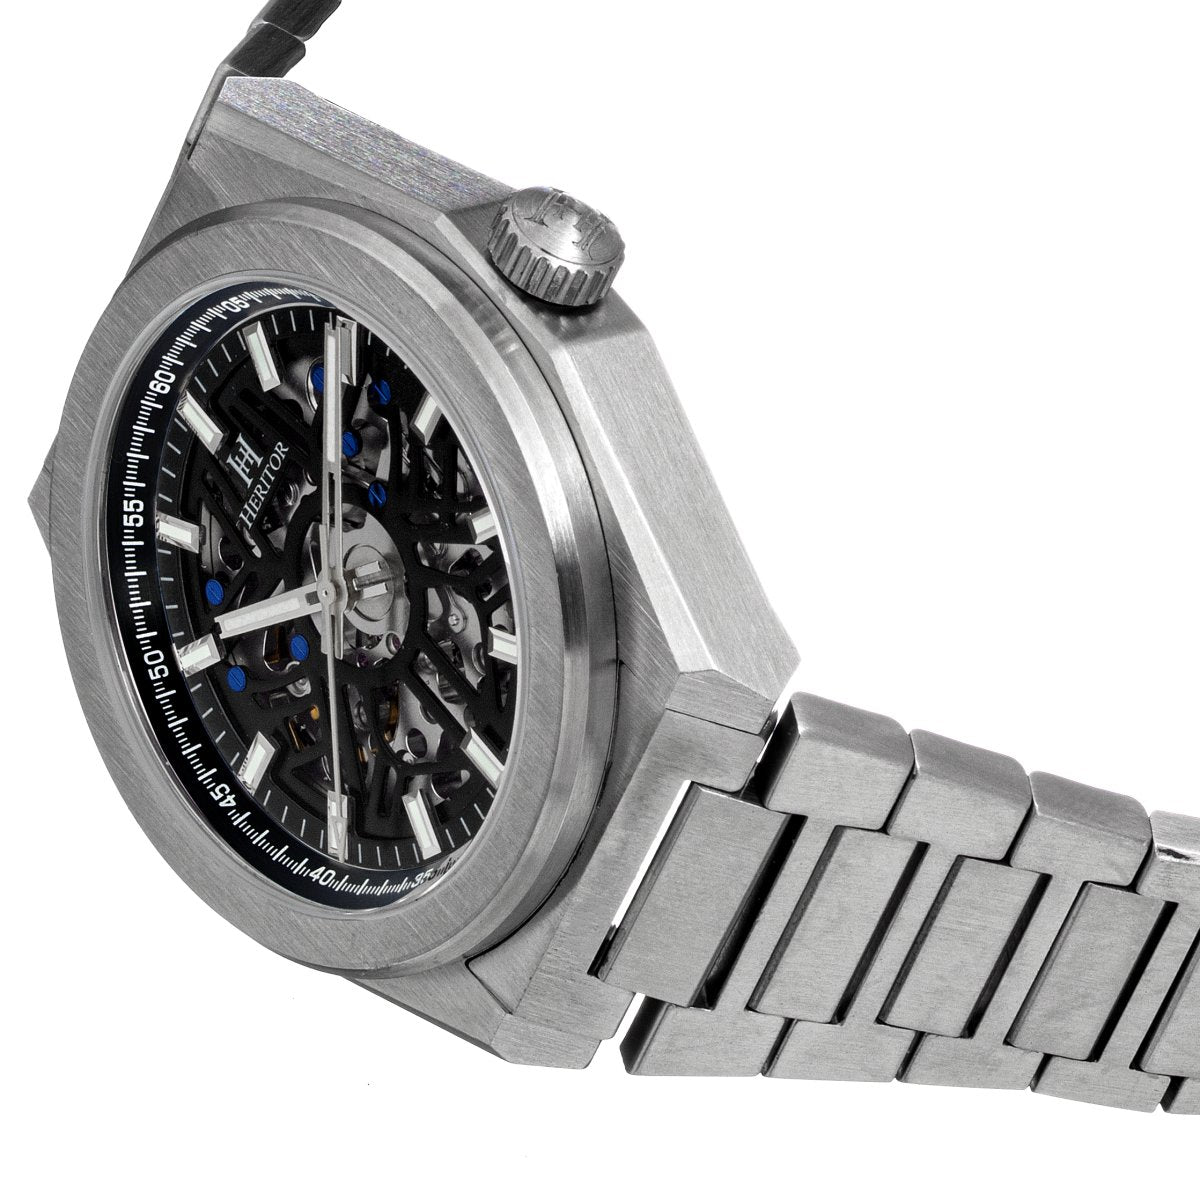 Heritor Automatic Atlas Bracelet Watch - Black - HERHS1307